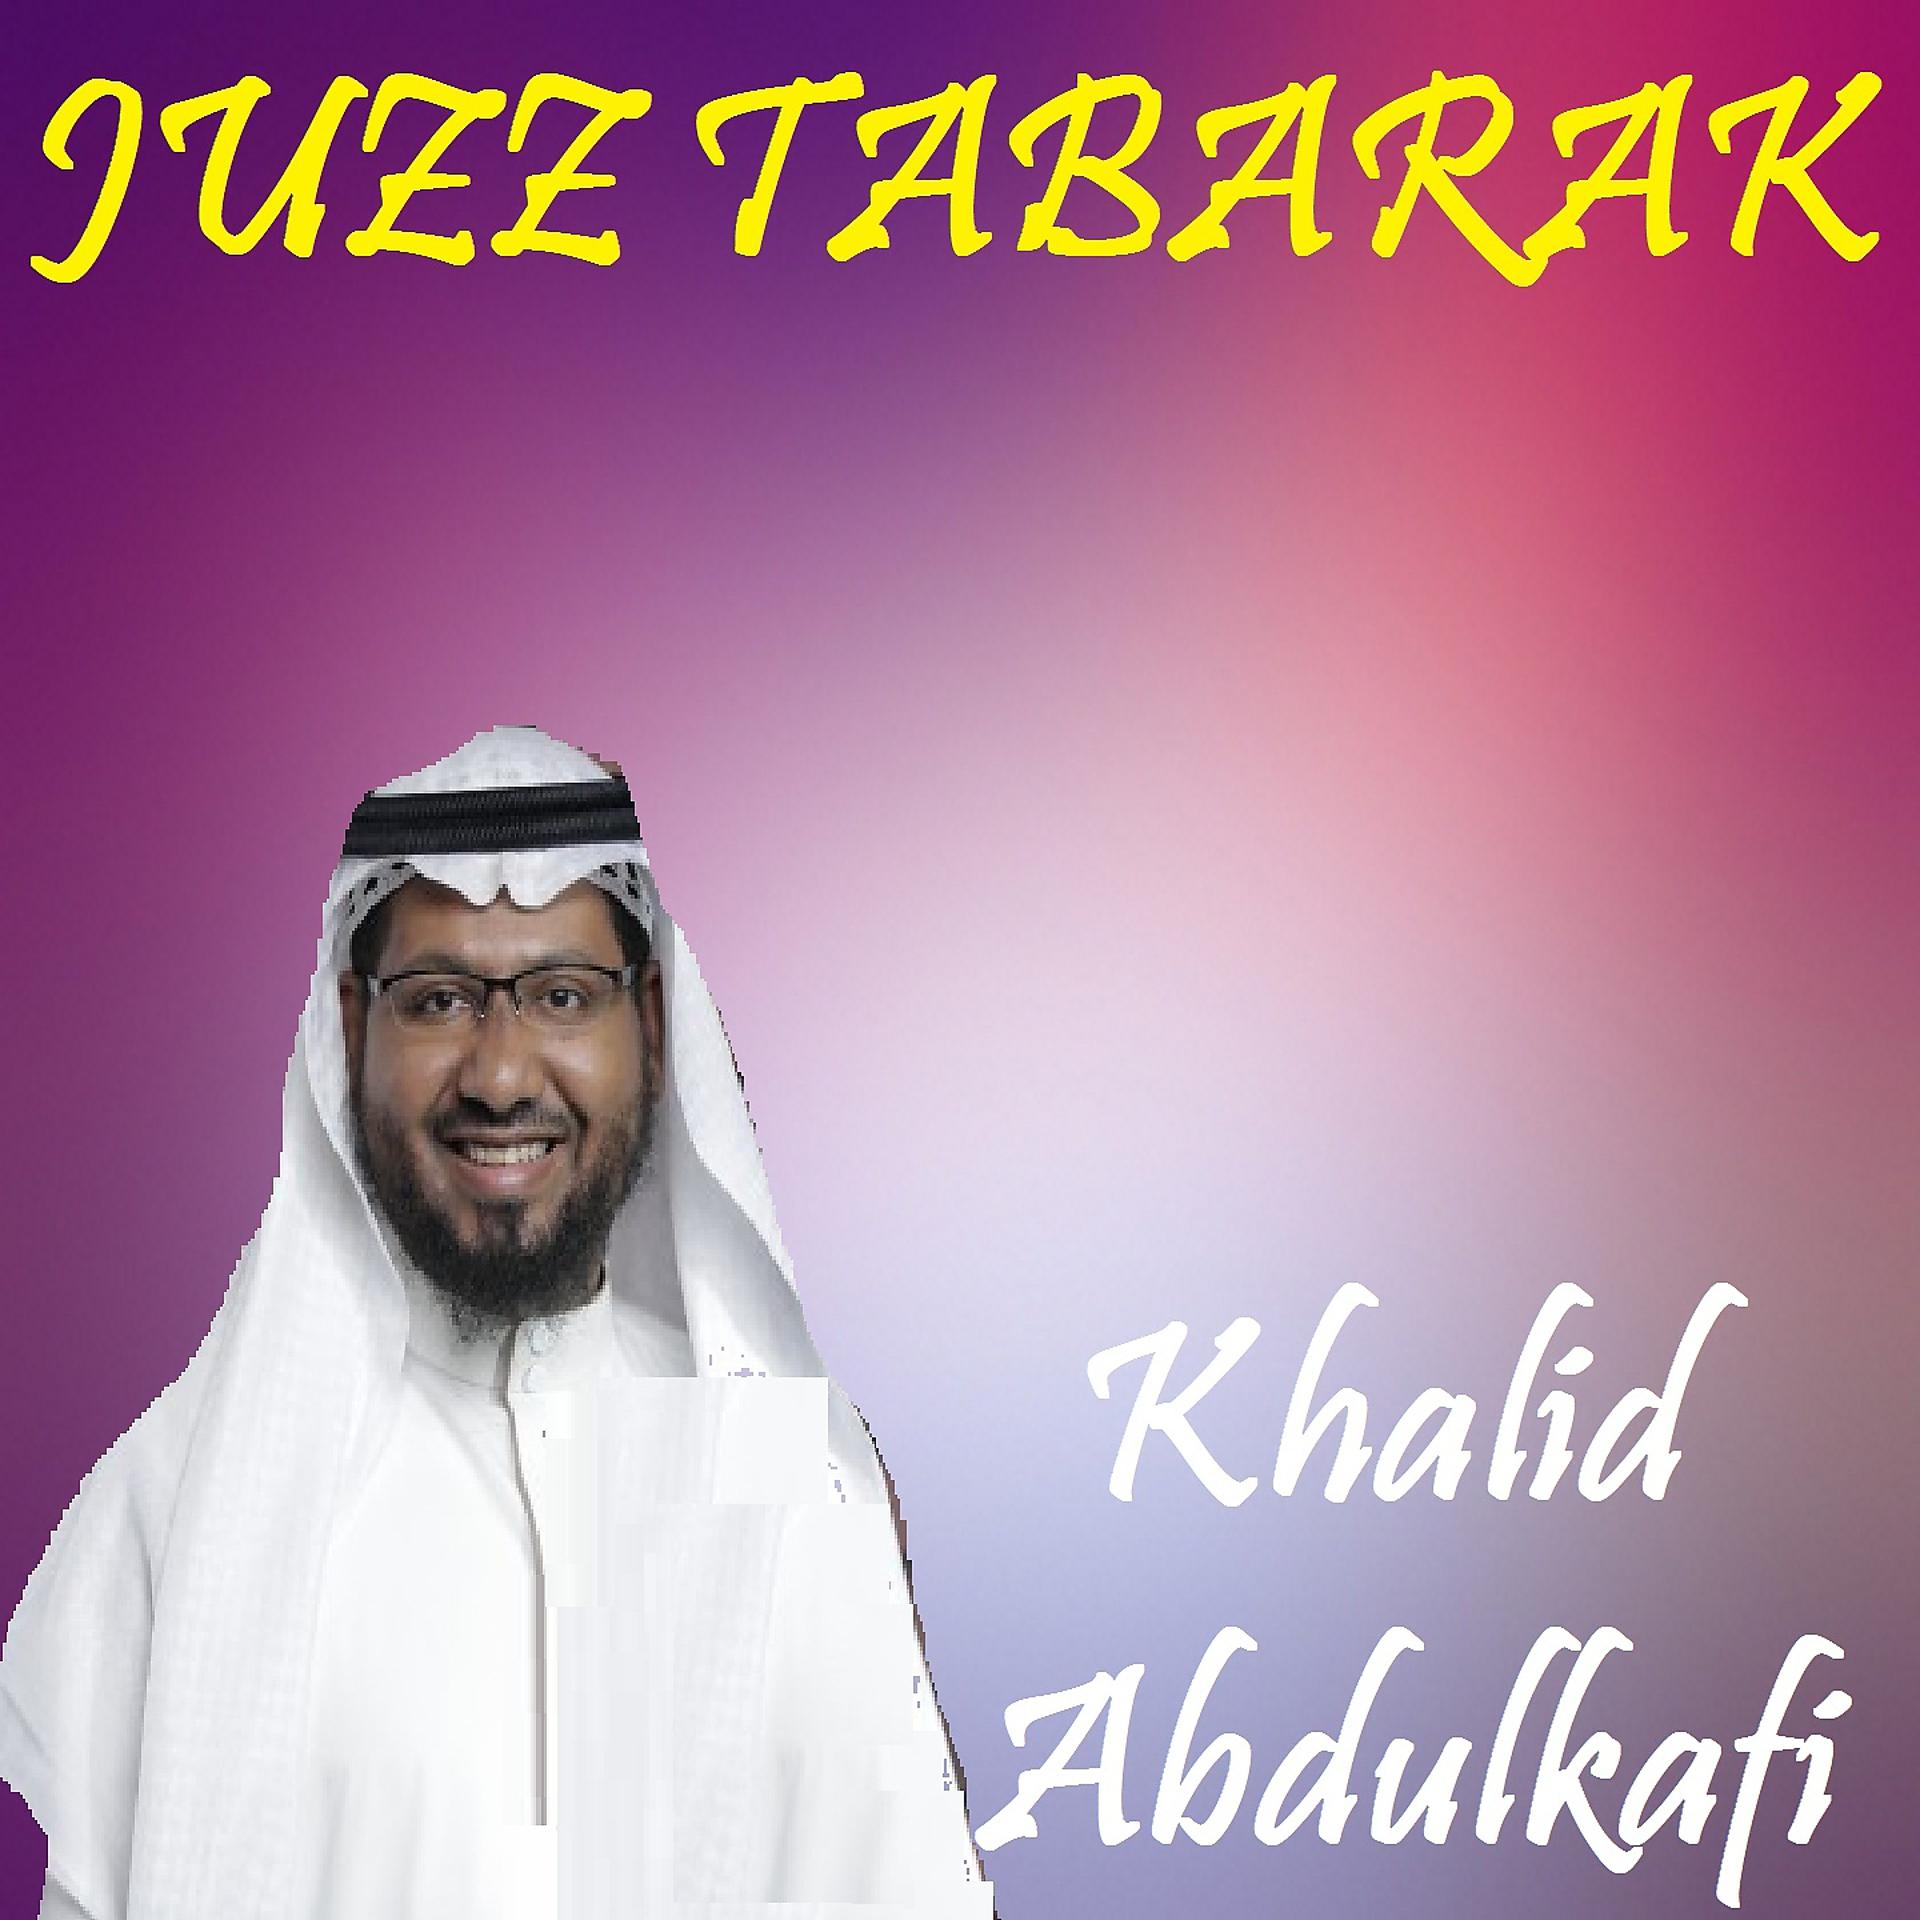 Постер альбома JUZZ TABARAK